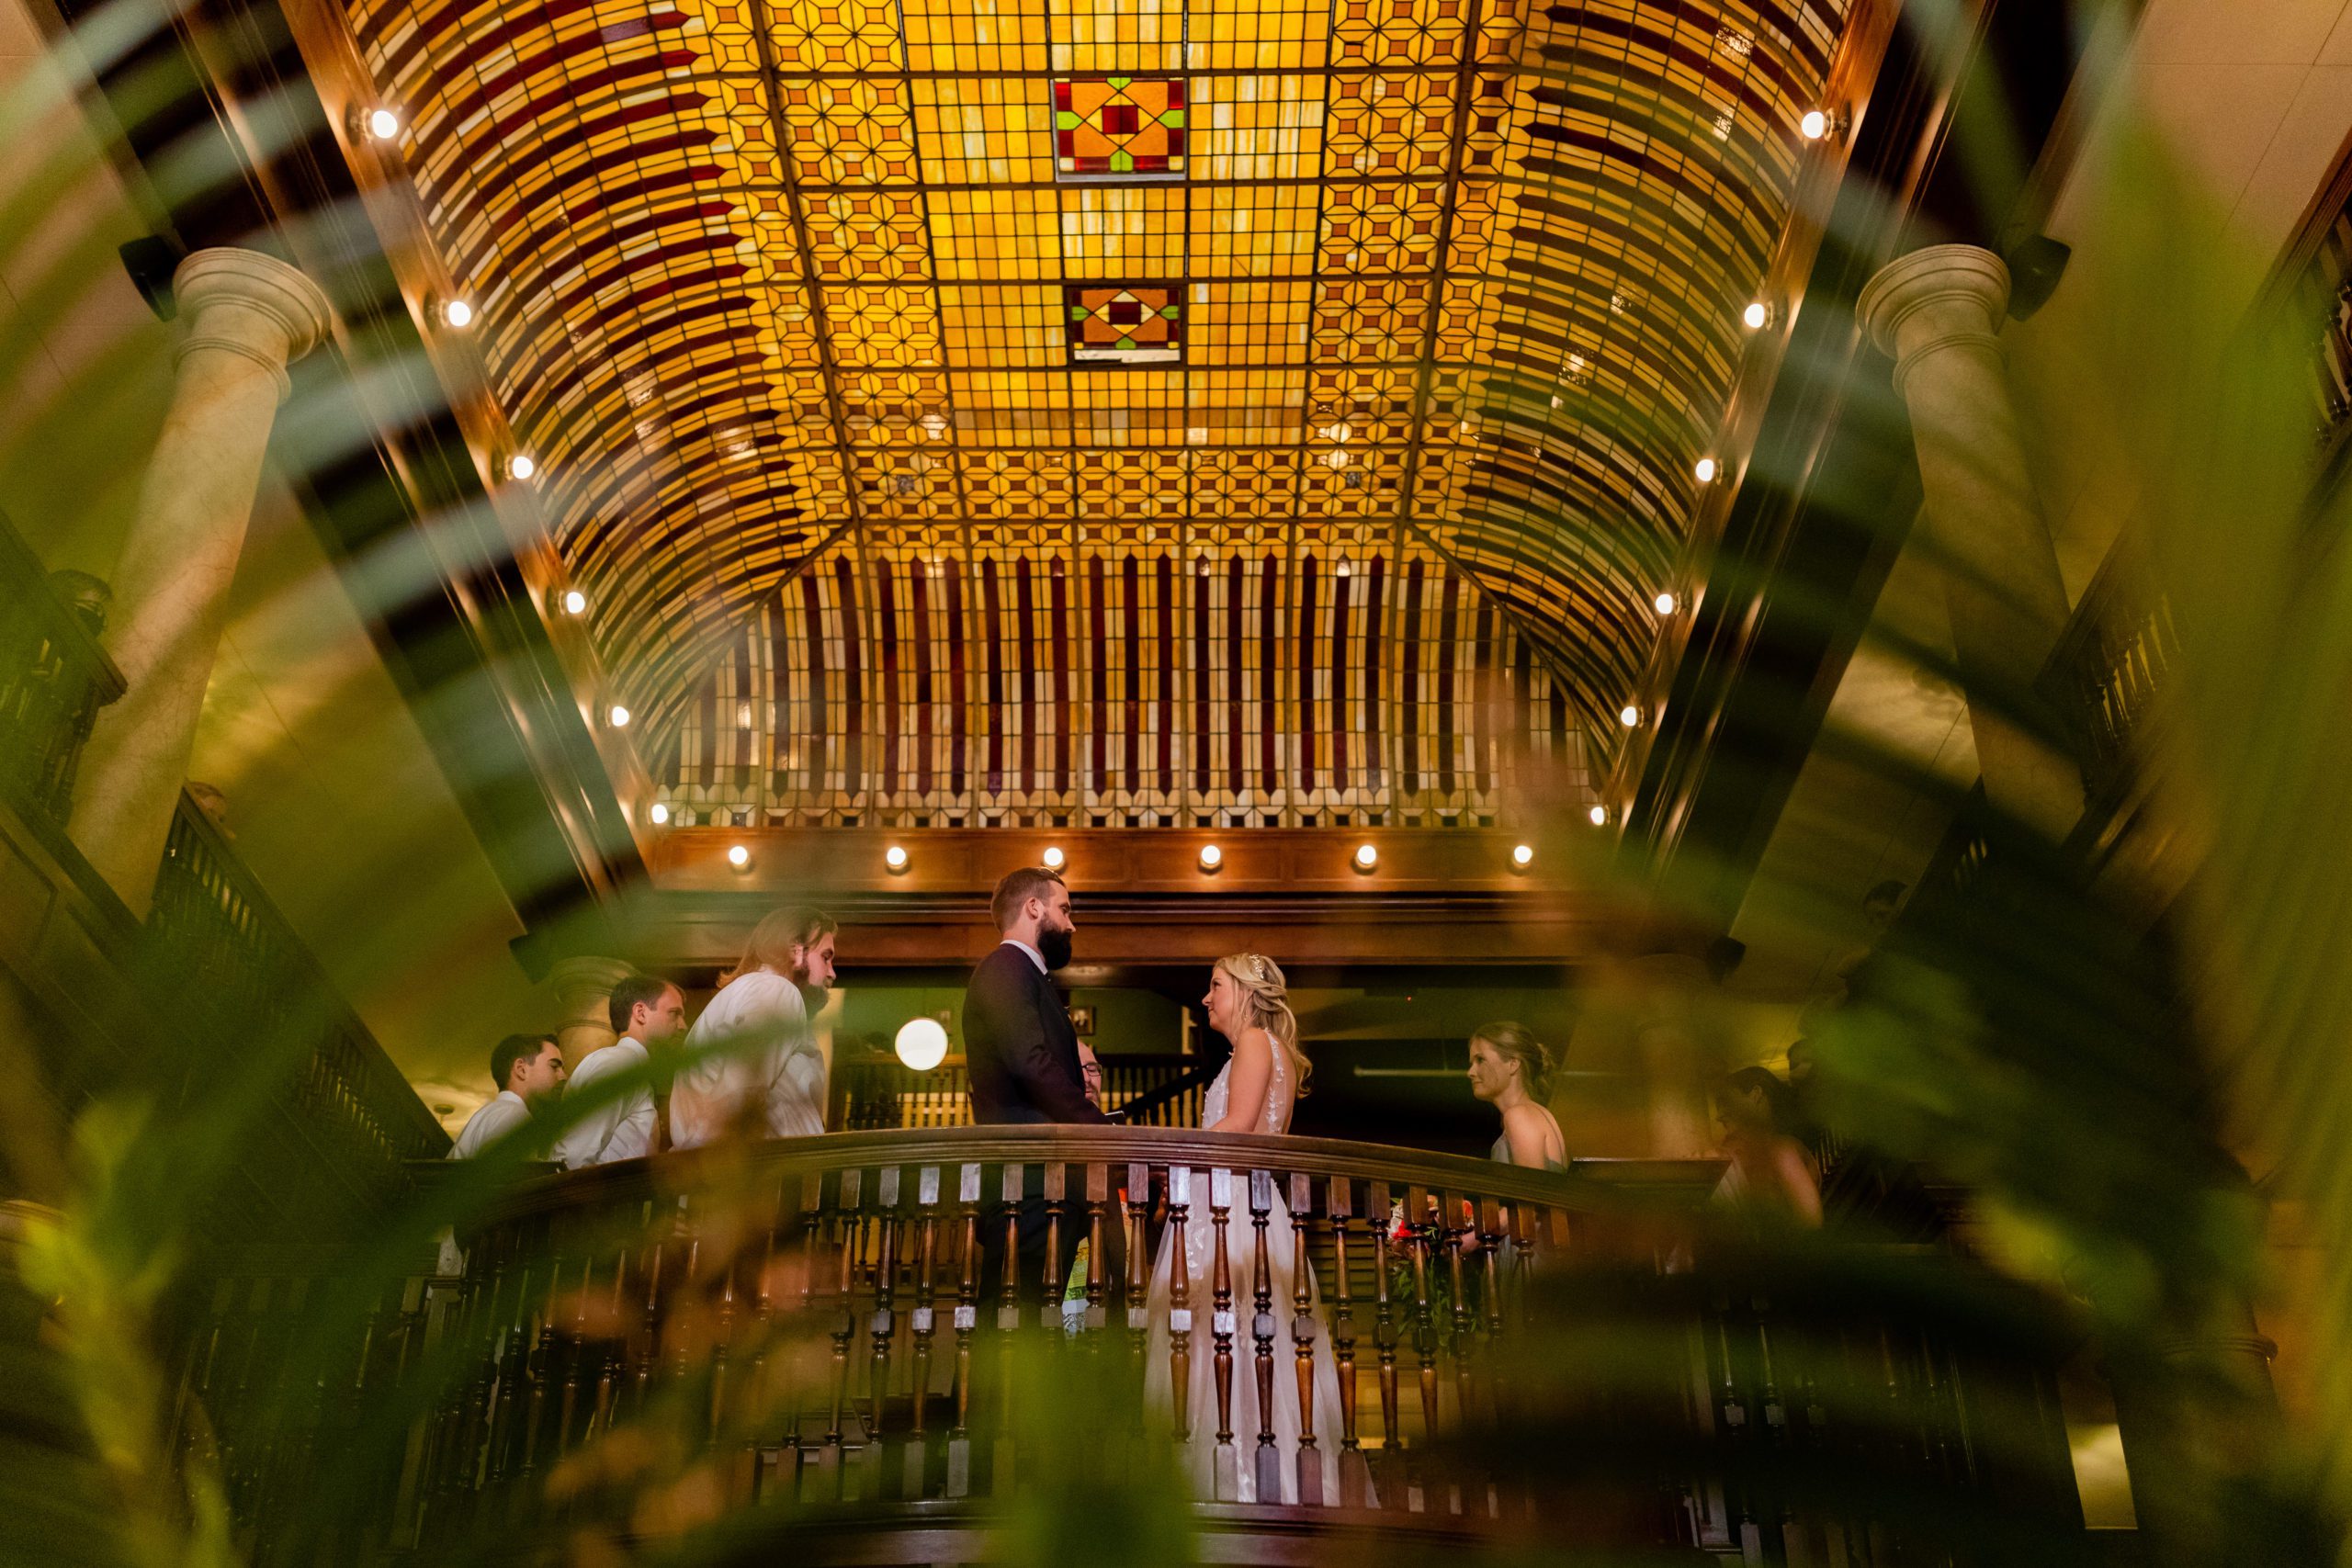 Hotel Boulderado wedding ceremony on the staircase balcony